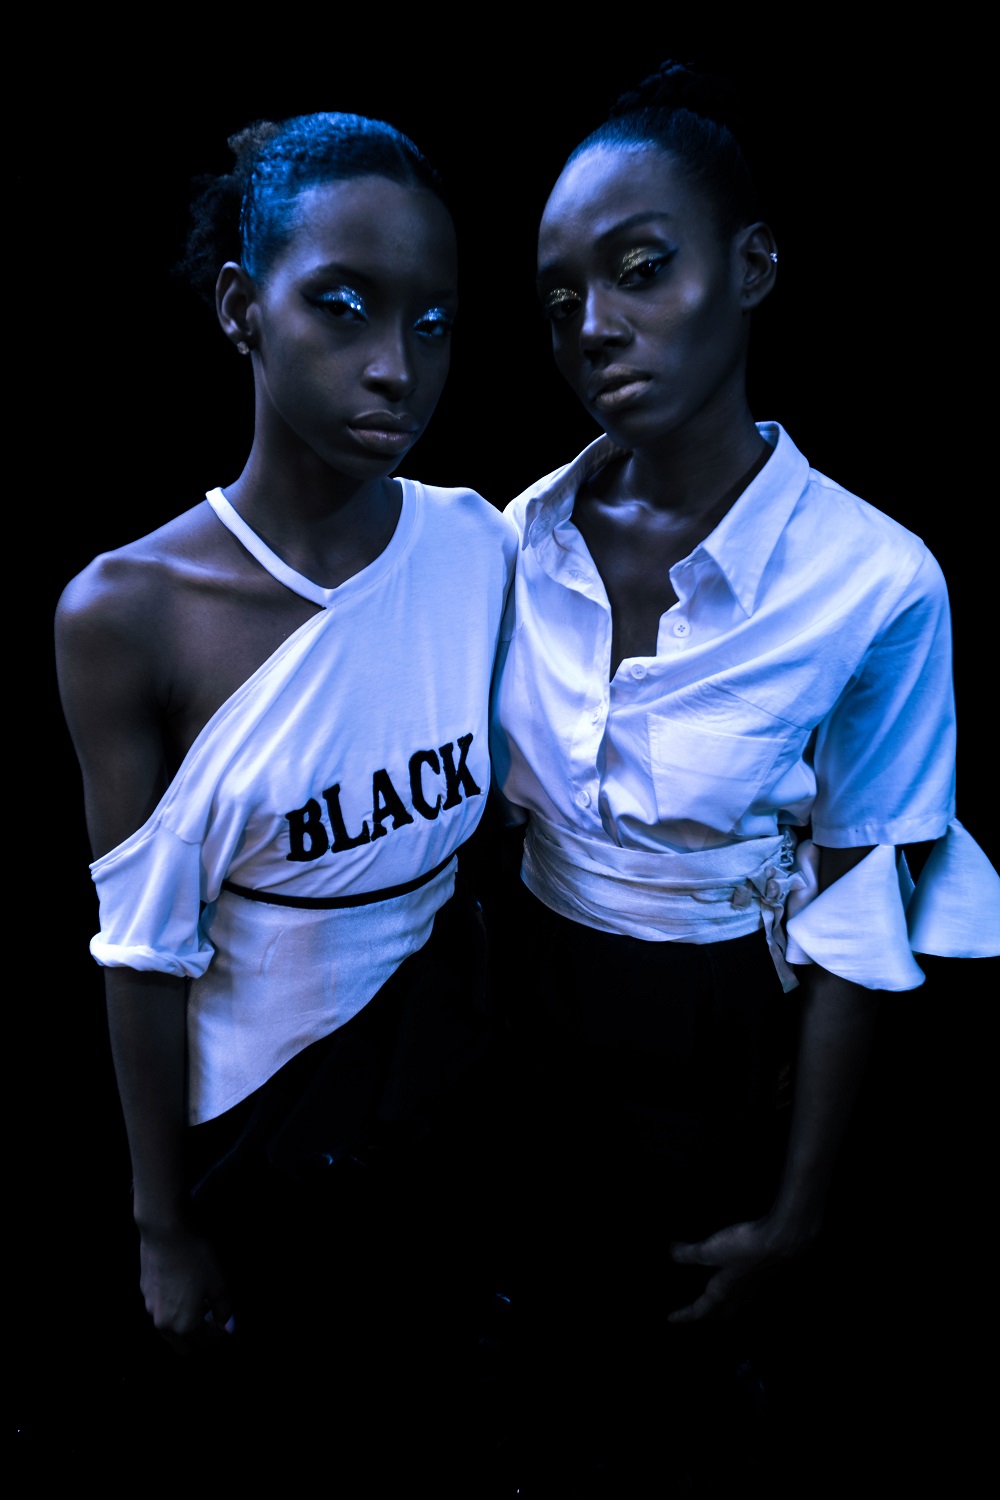 Every Look From Nola Black’s “Òlókun” Collection